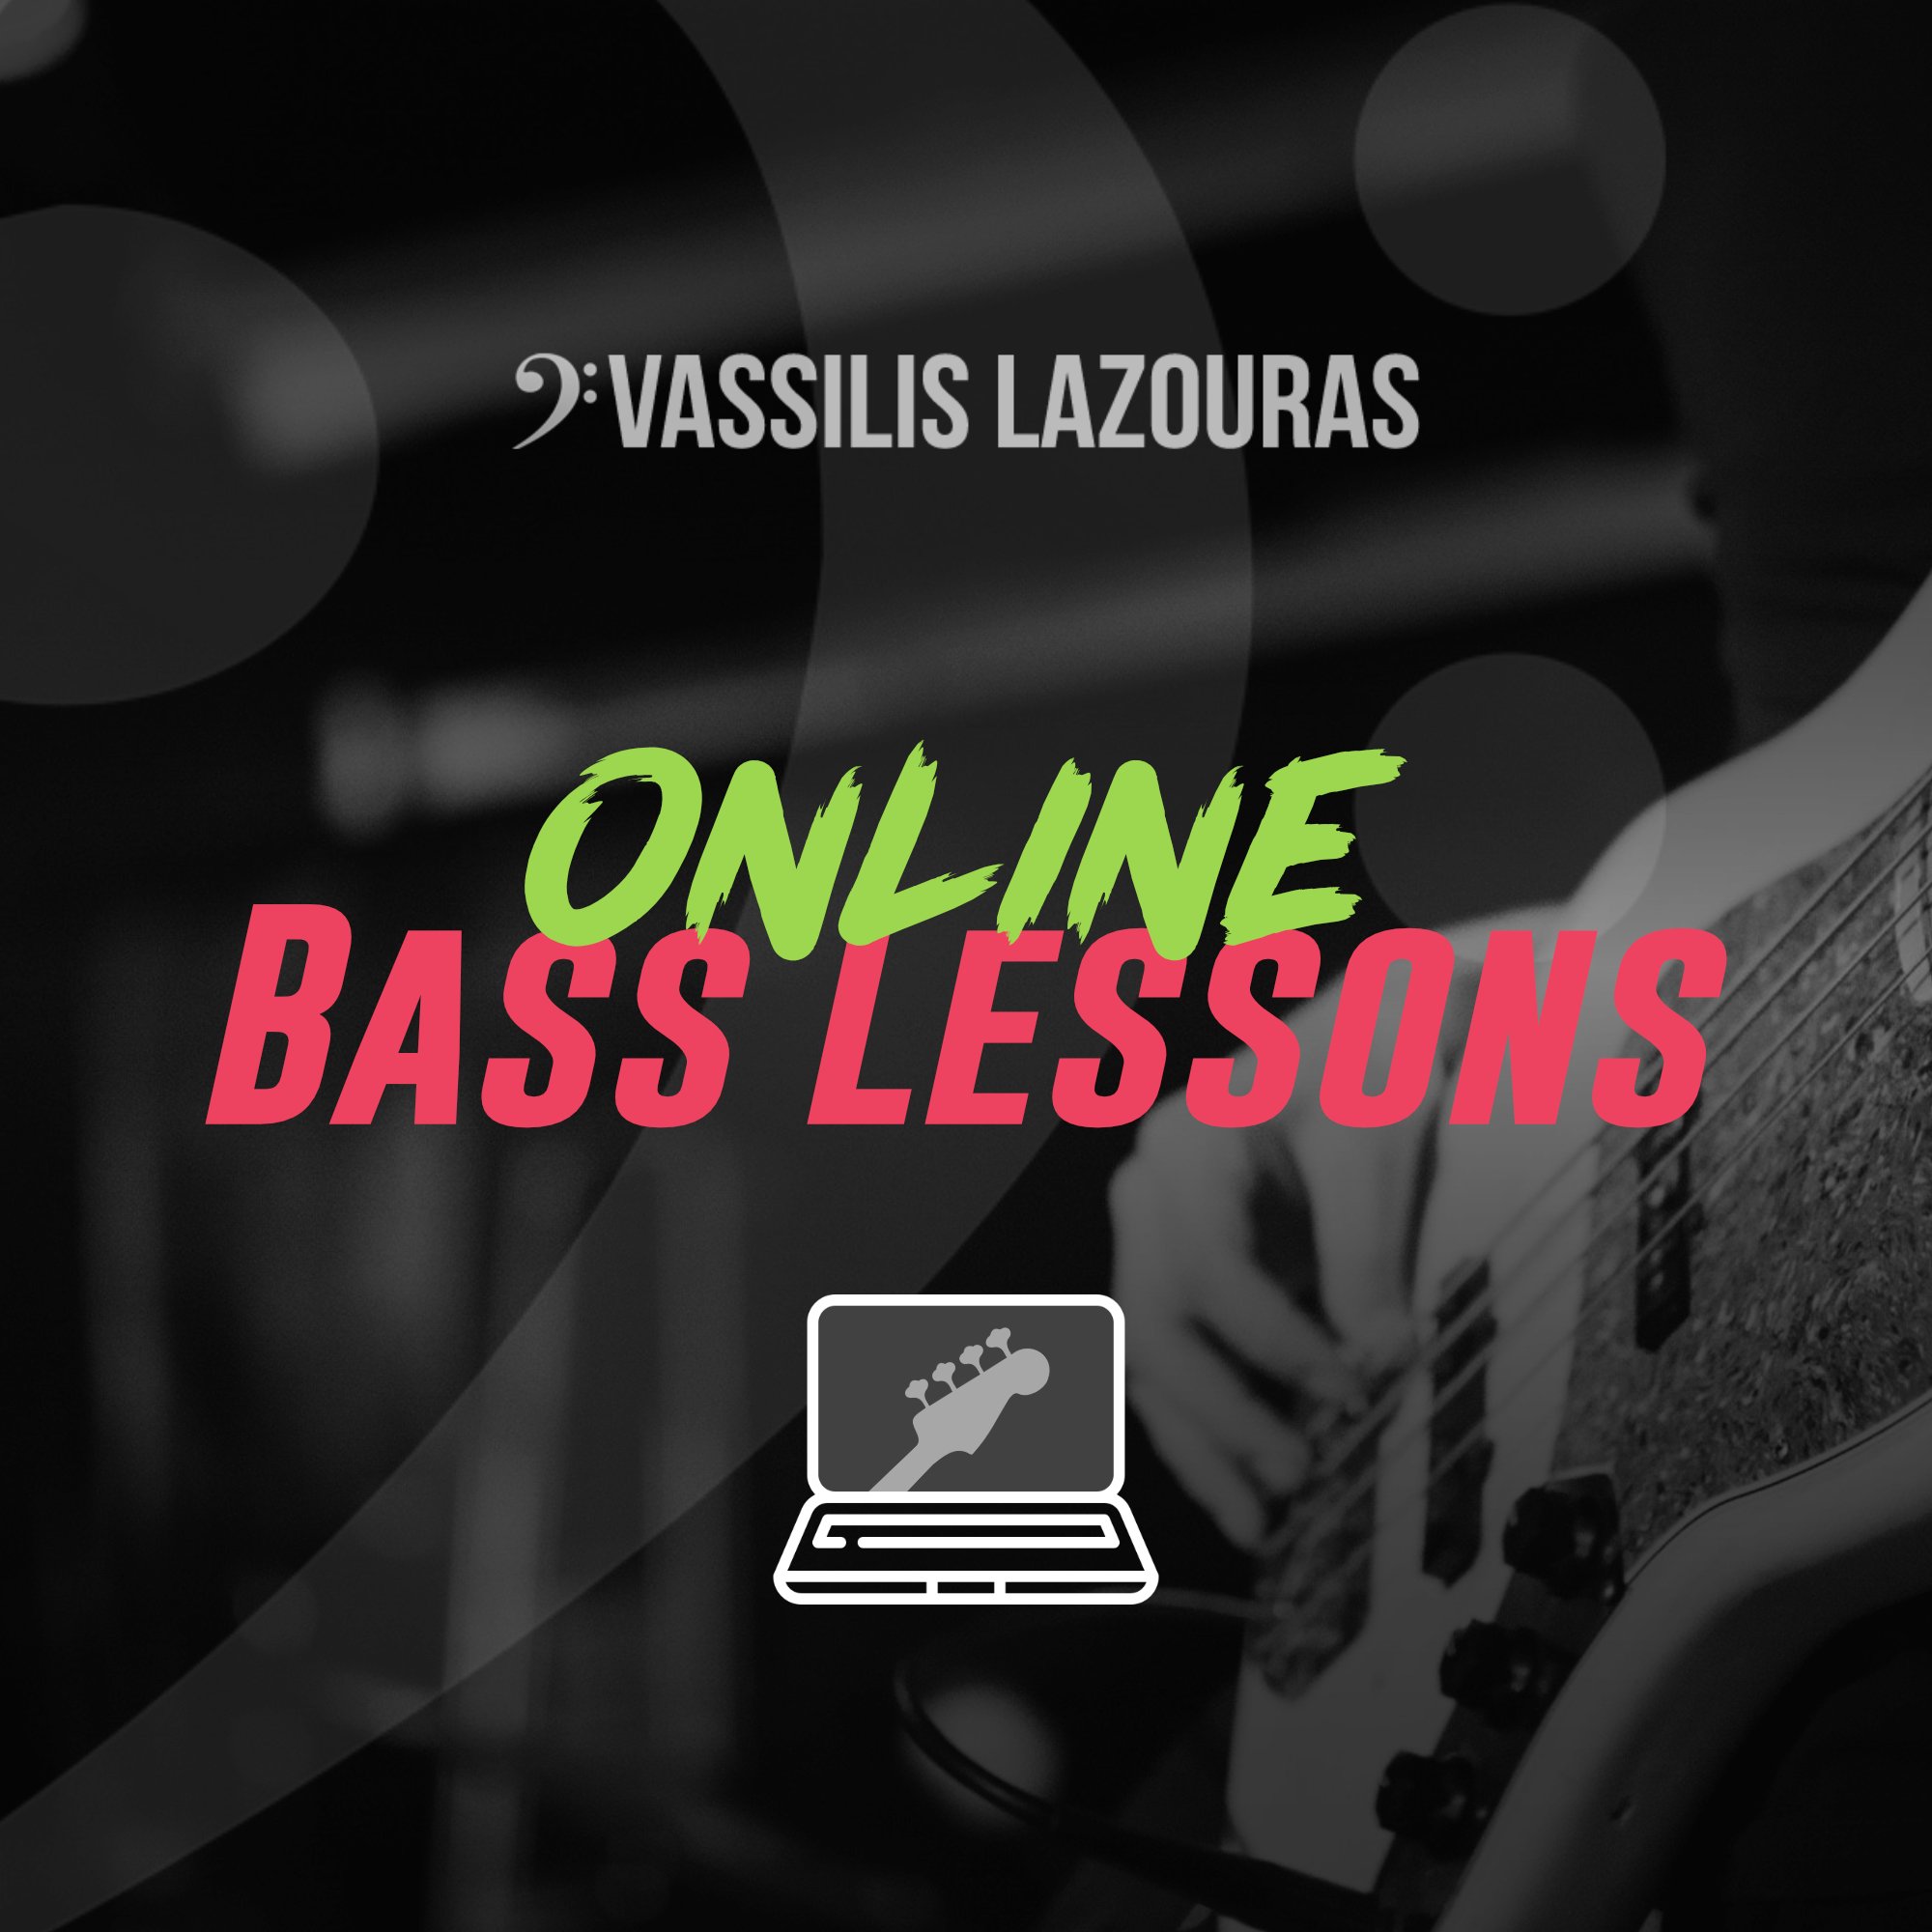 1hr Bass lesson - Online